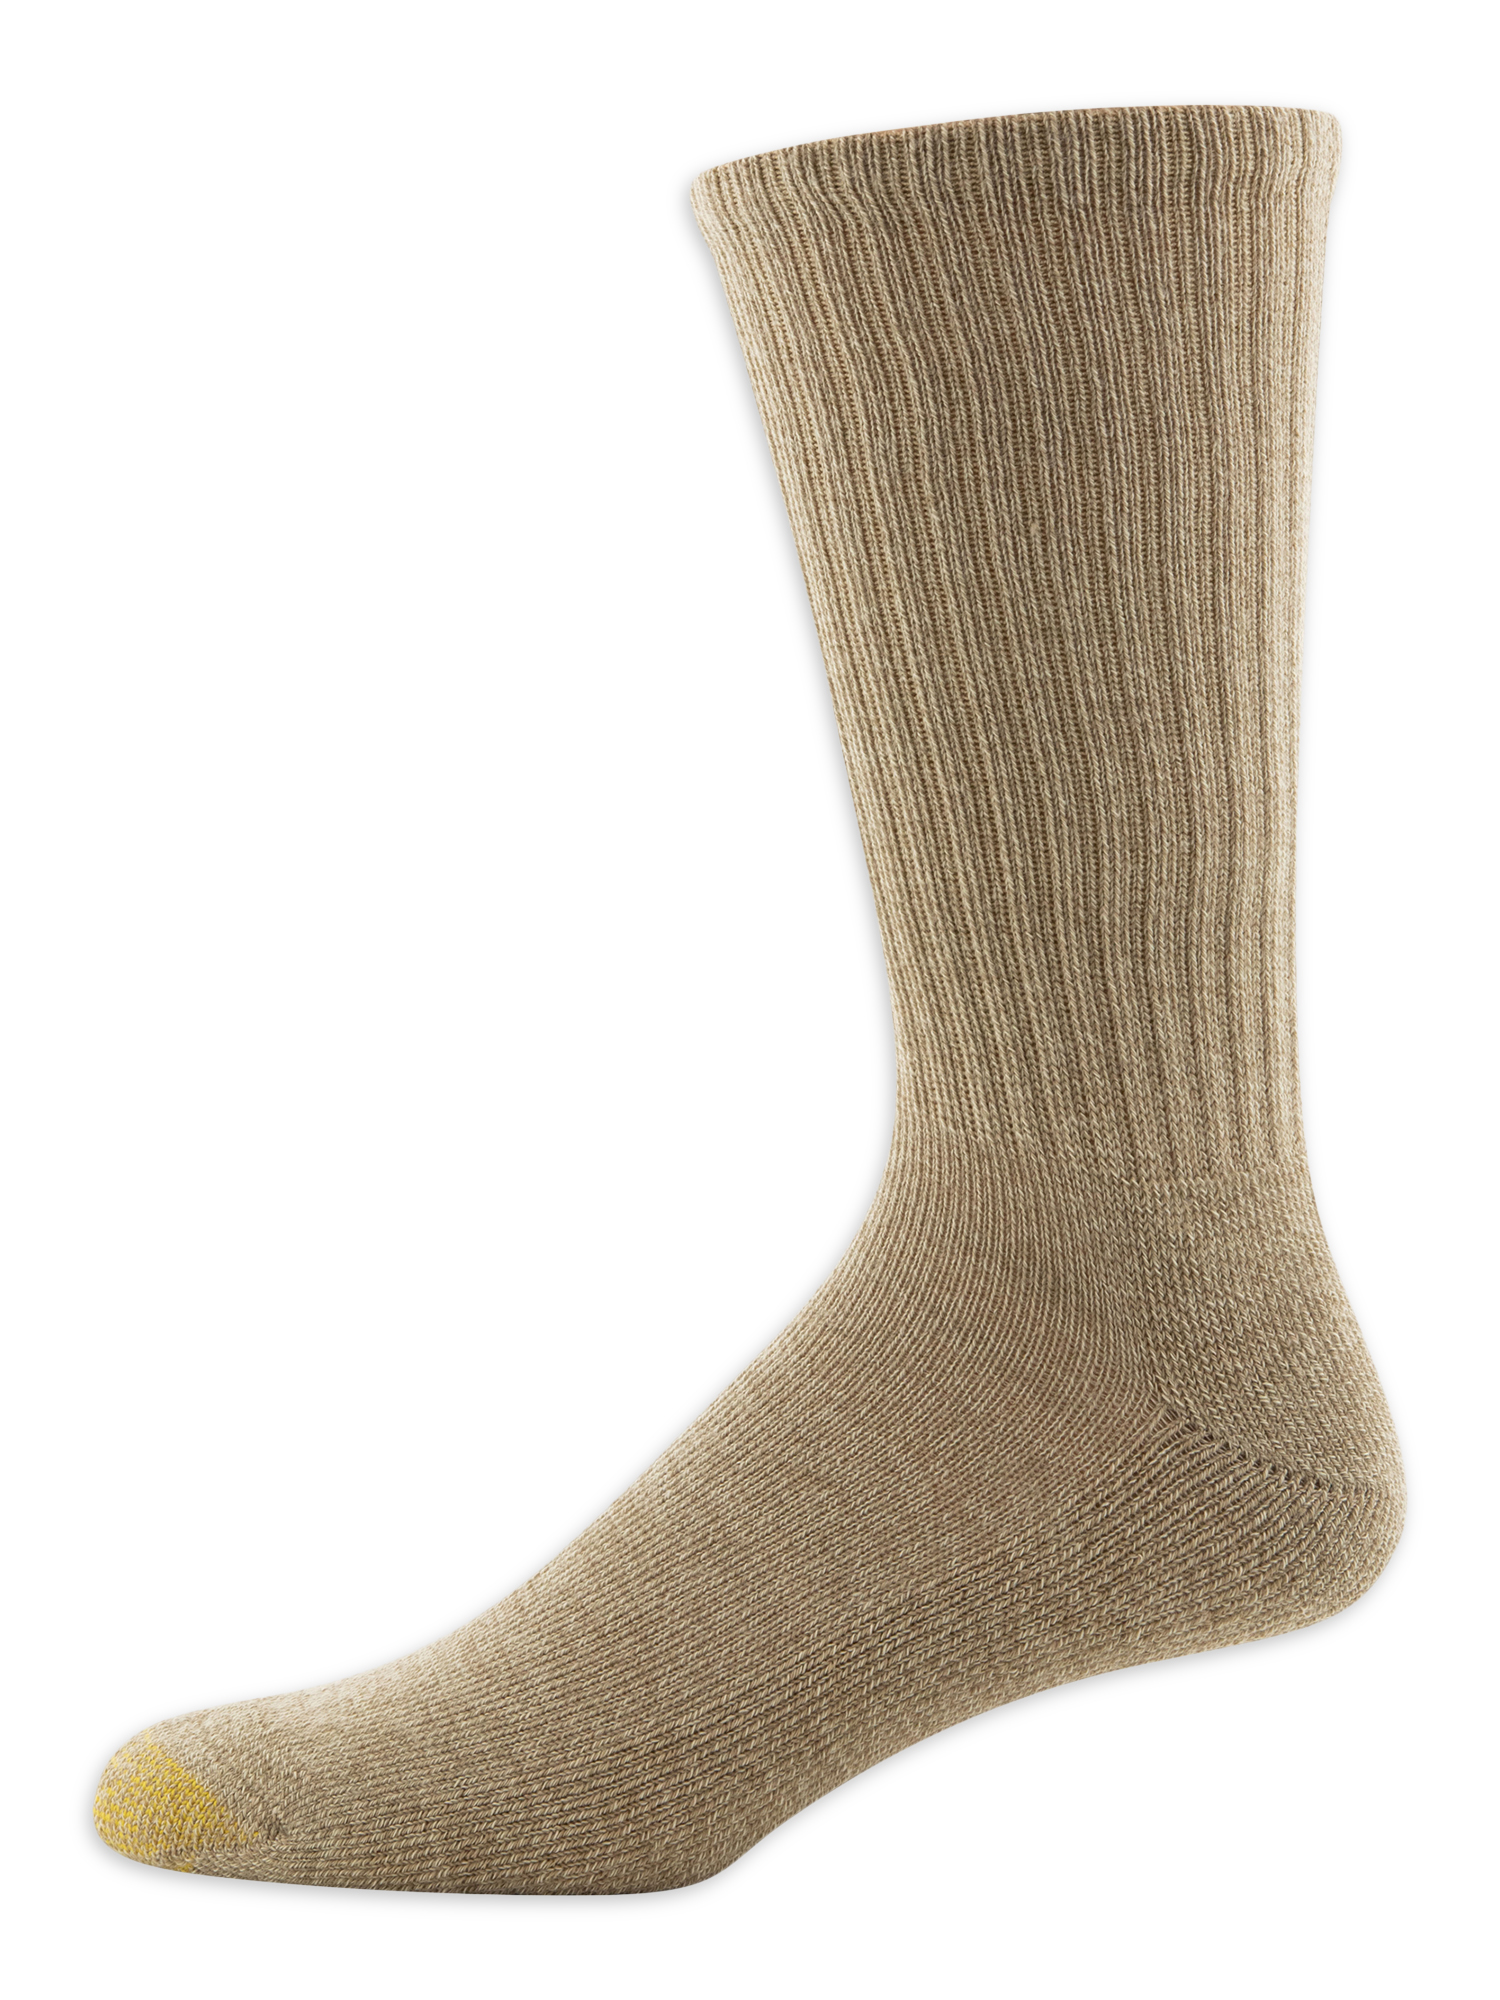 GOLDTOE Edition Men's Casual Cushion Crew Socks, 6-Pack - image 3 of 4